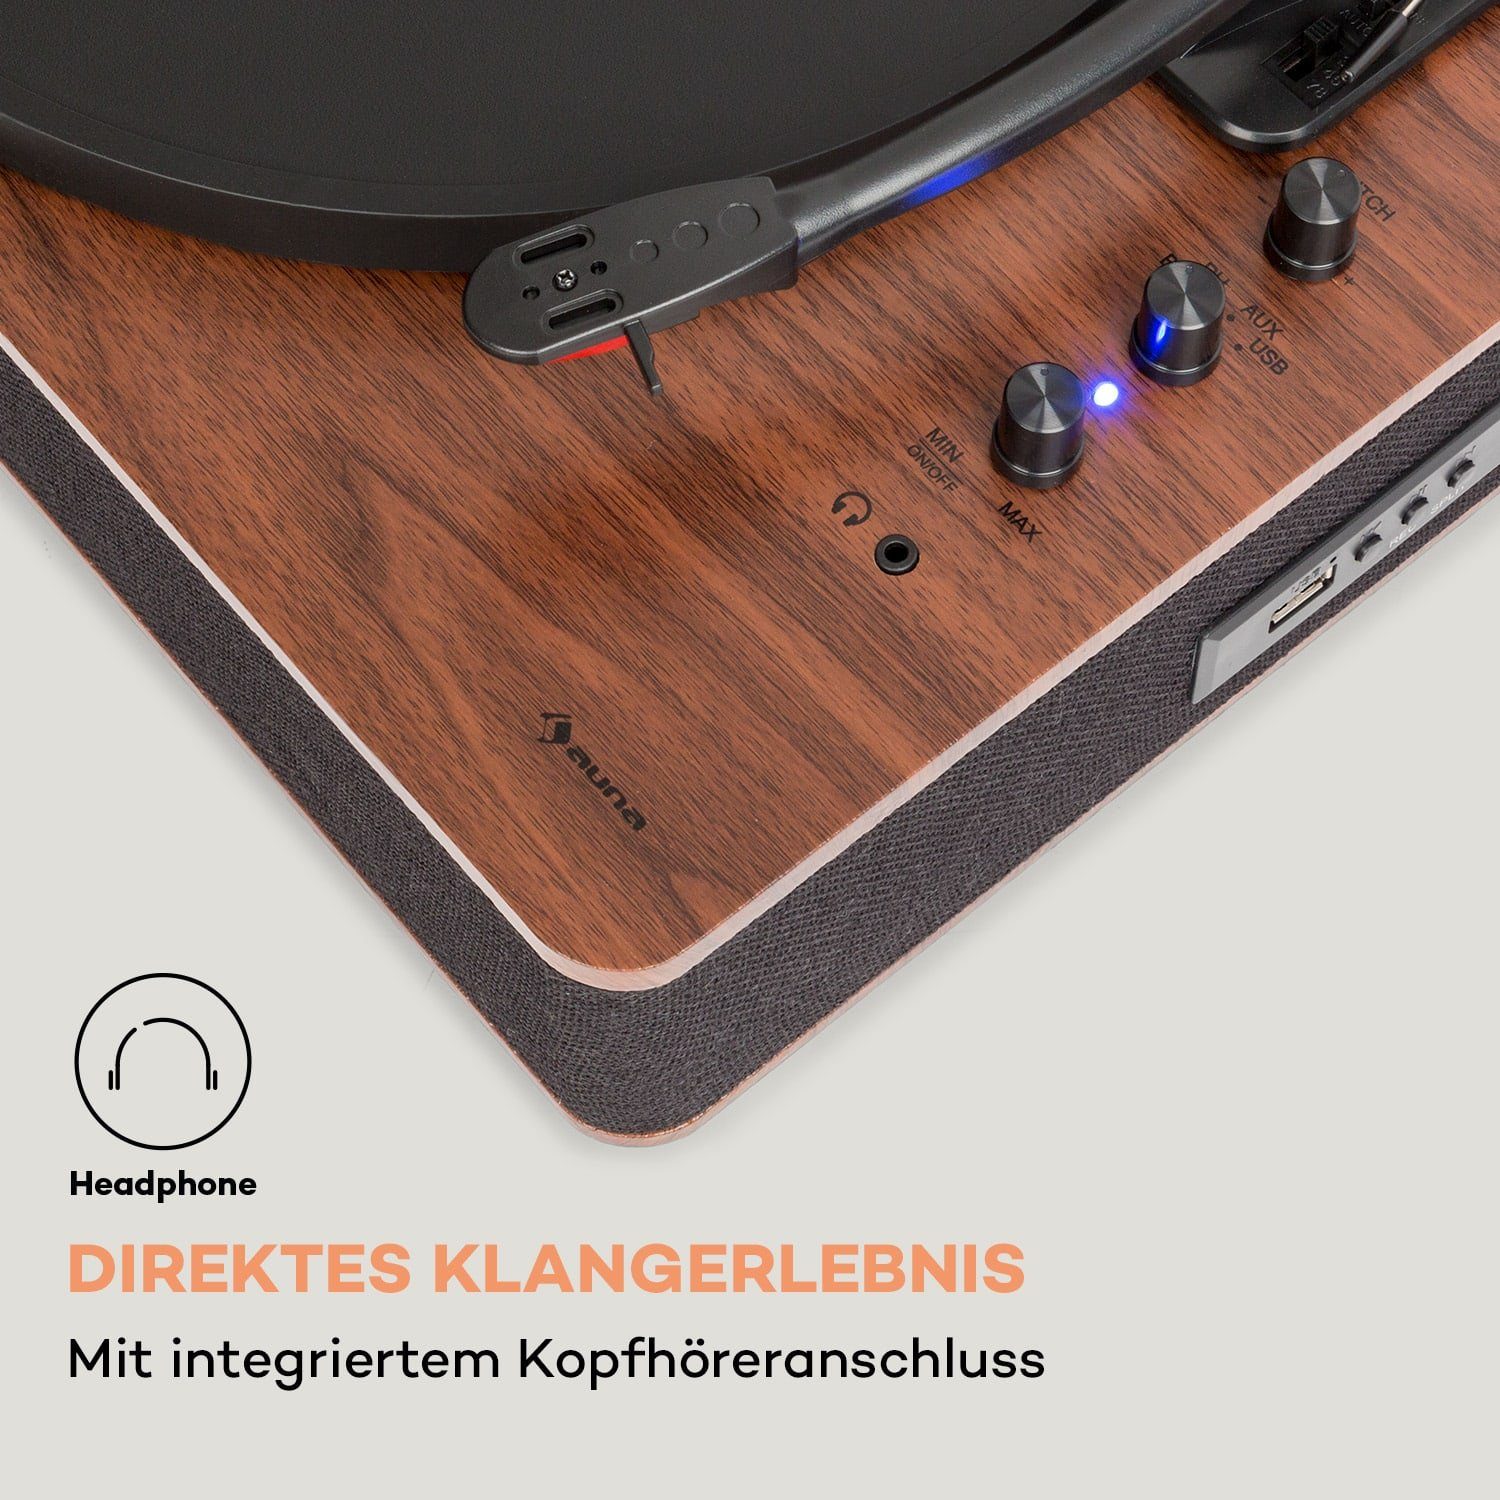 Auna Plattenspieler Plattenspieler) Bluetooth, Lautsprecher Plus Schallplattenspieler mit Vinyl (Riemenantrieb, TT-Classic